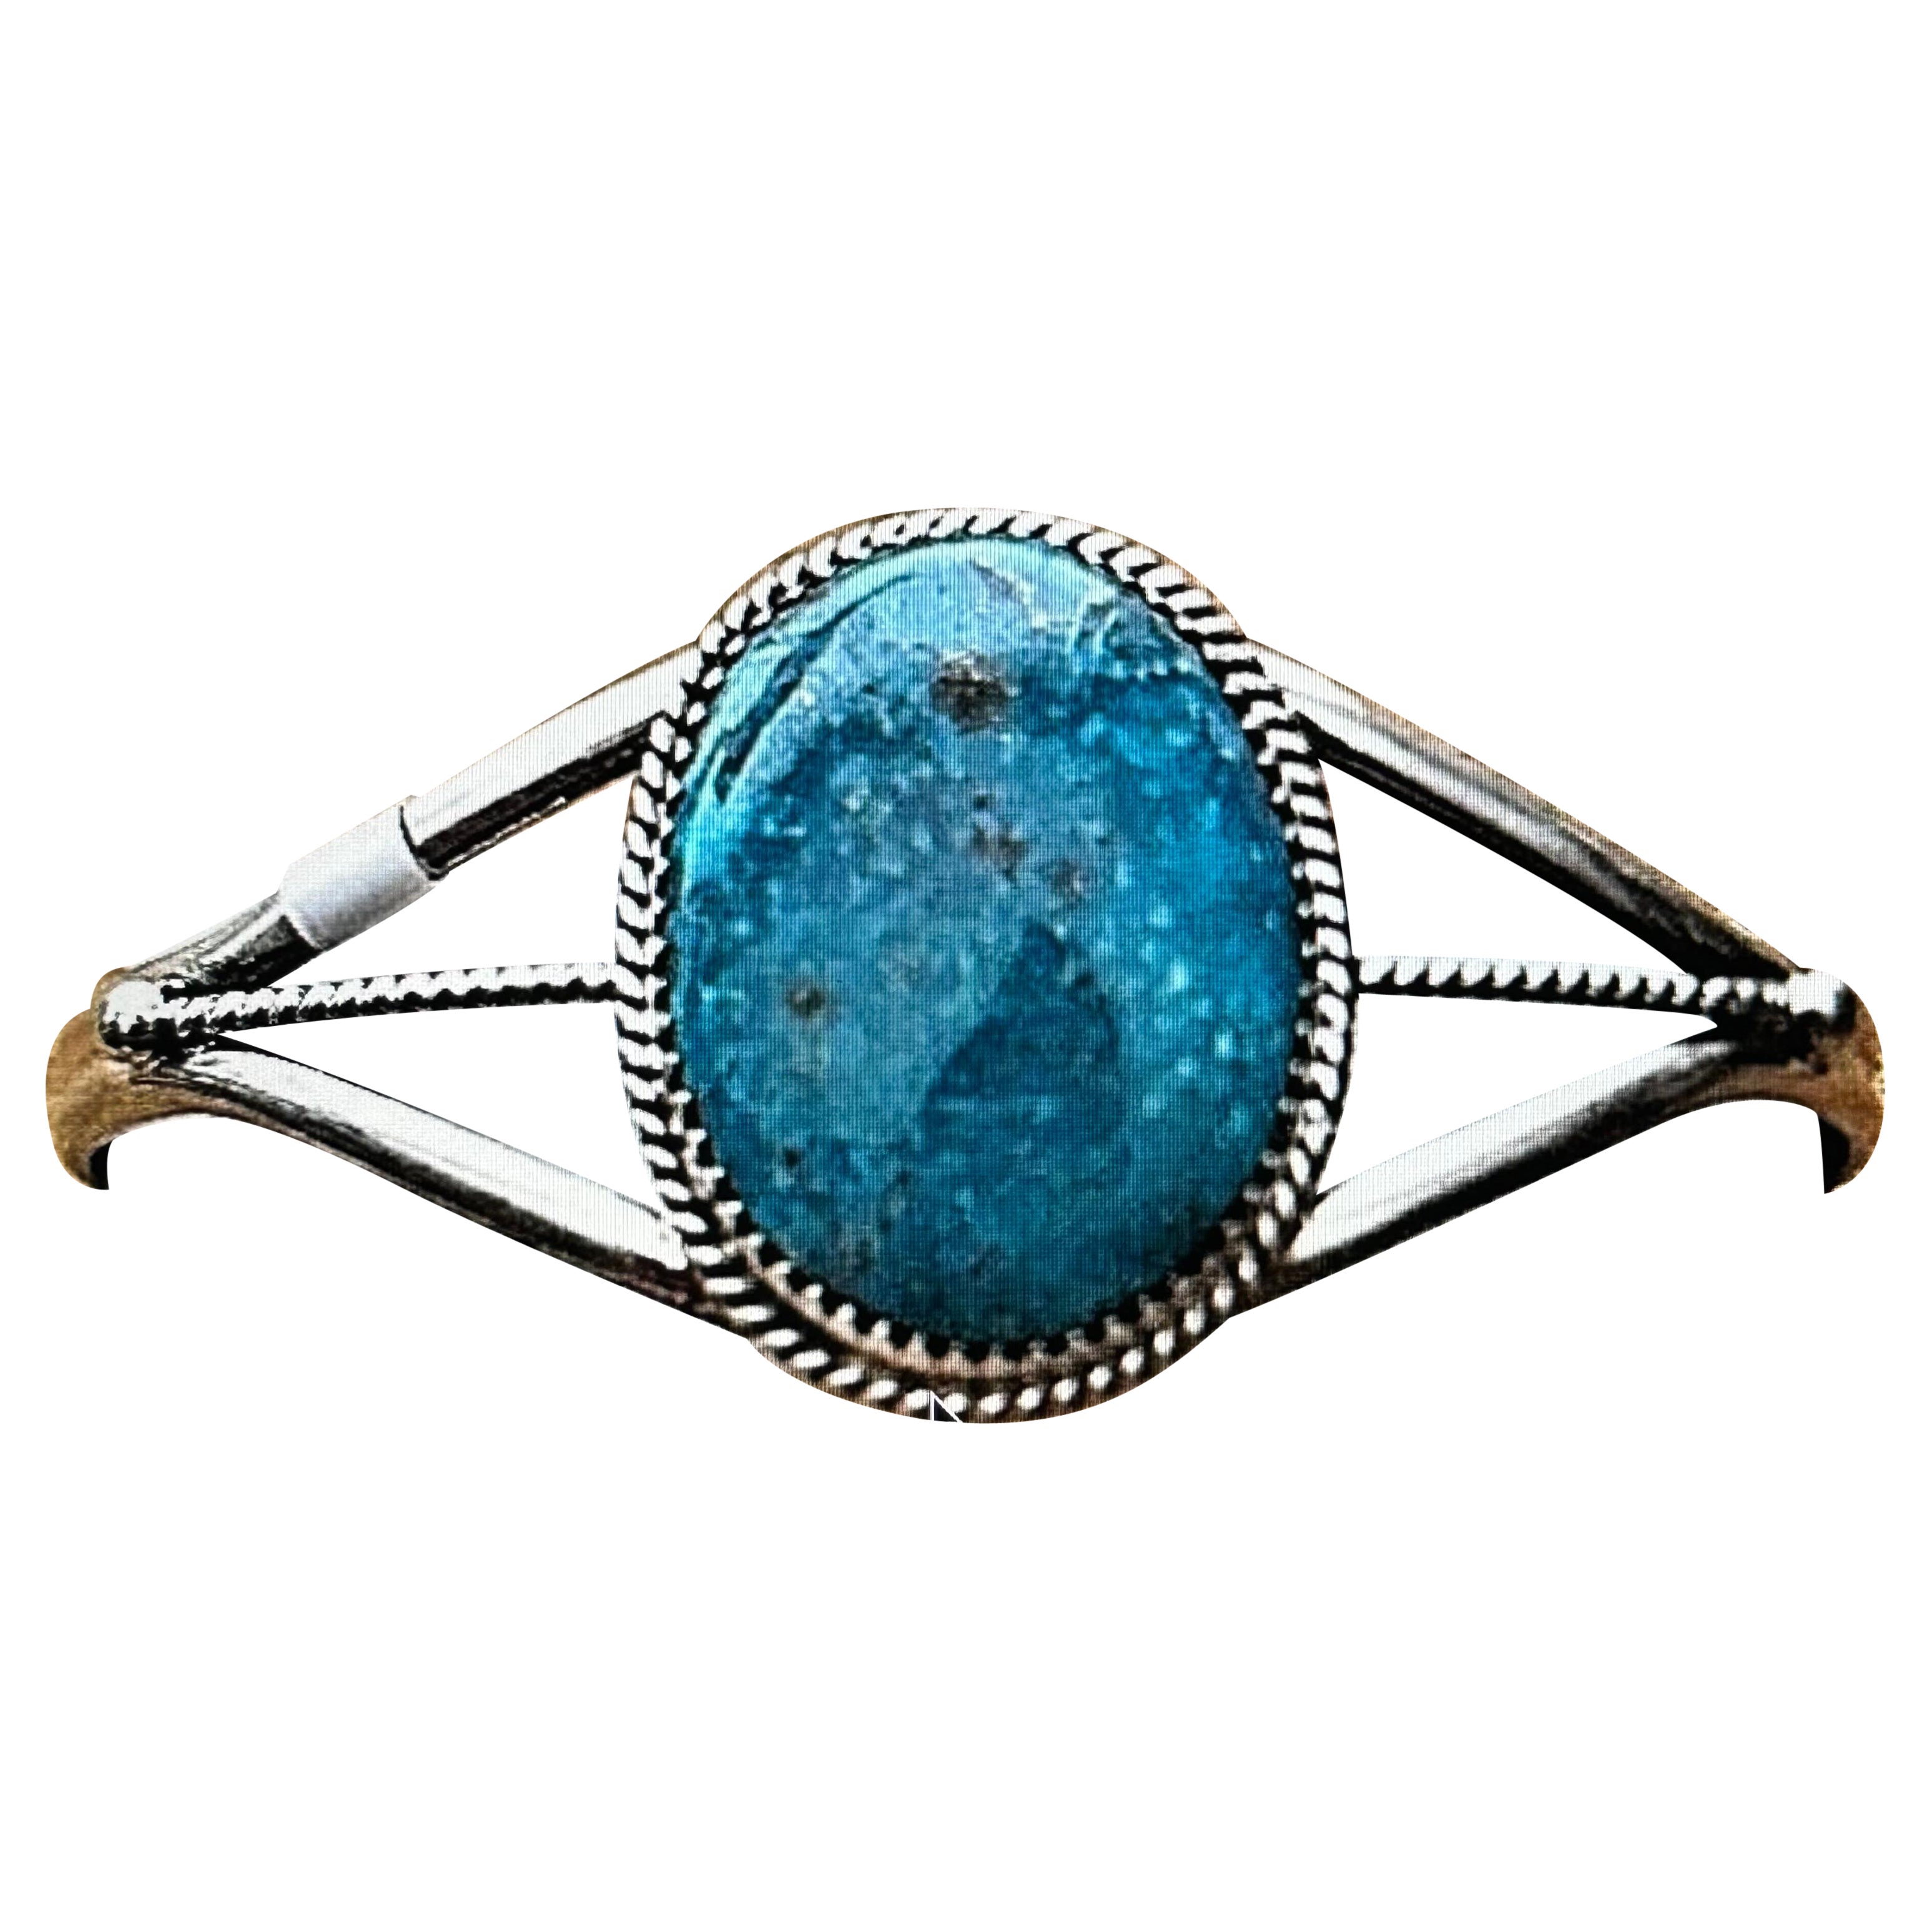 Manchette Birdseye Turquoise en argent sterling de l'artiste Navajo Phillip Yazzie